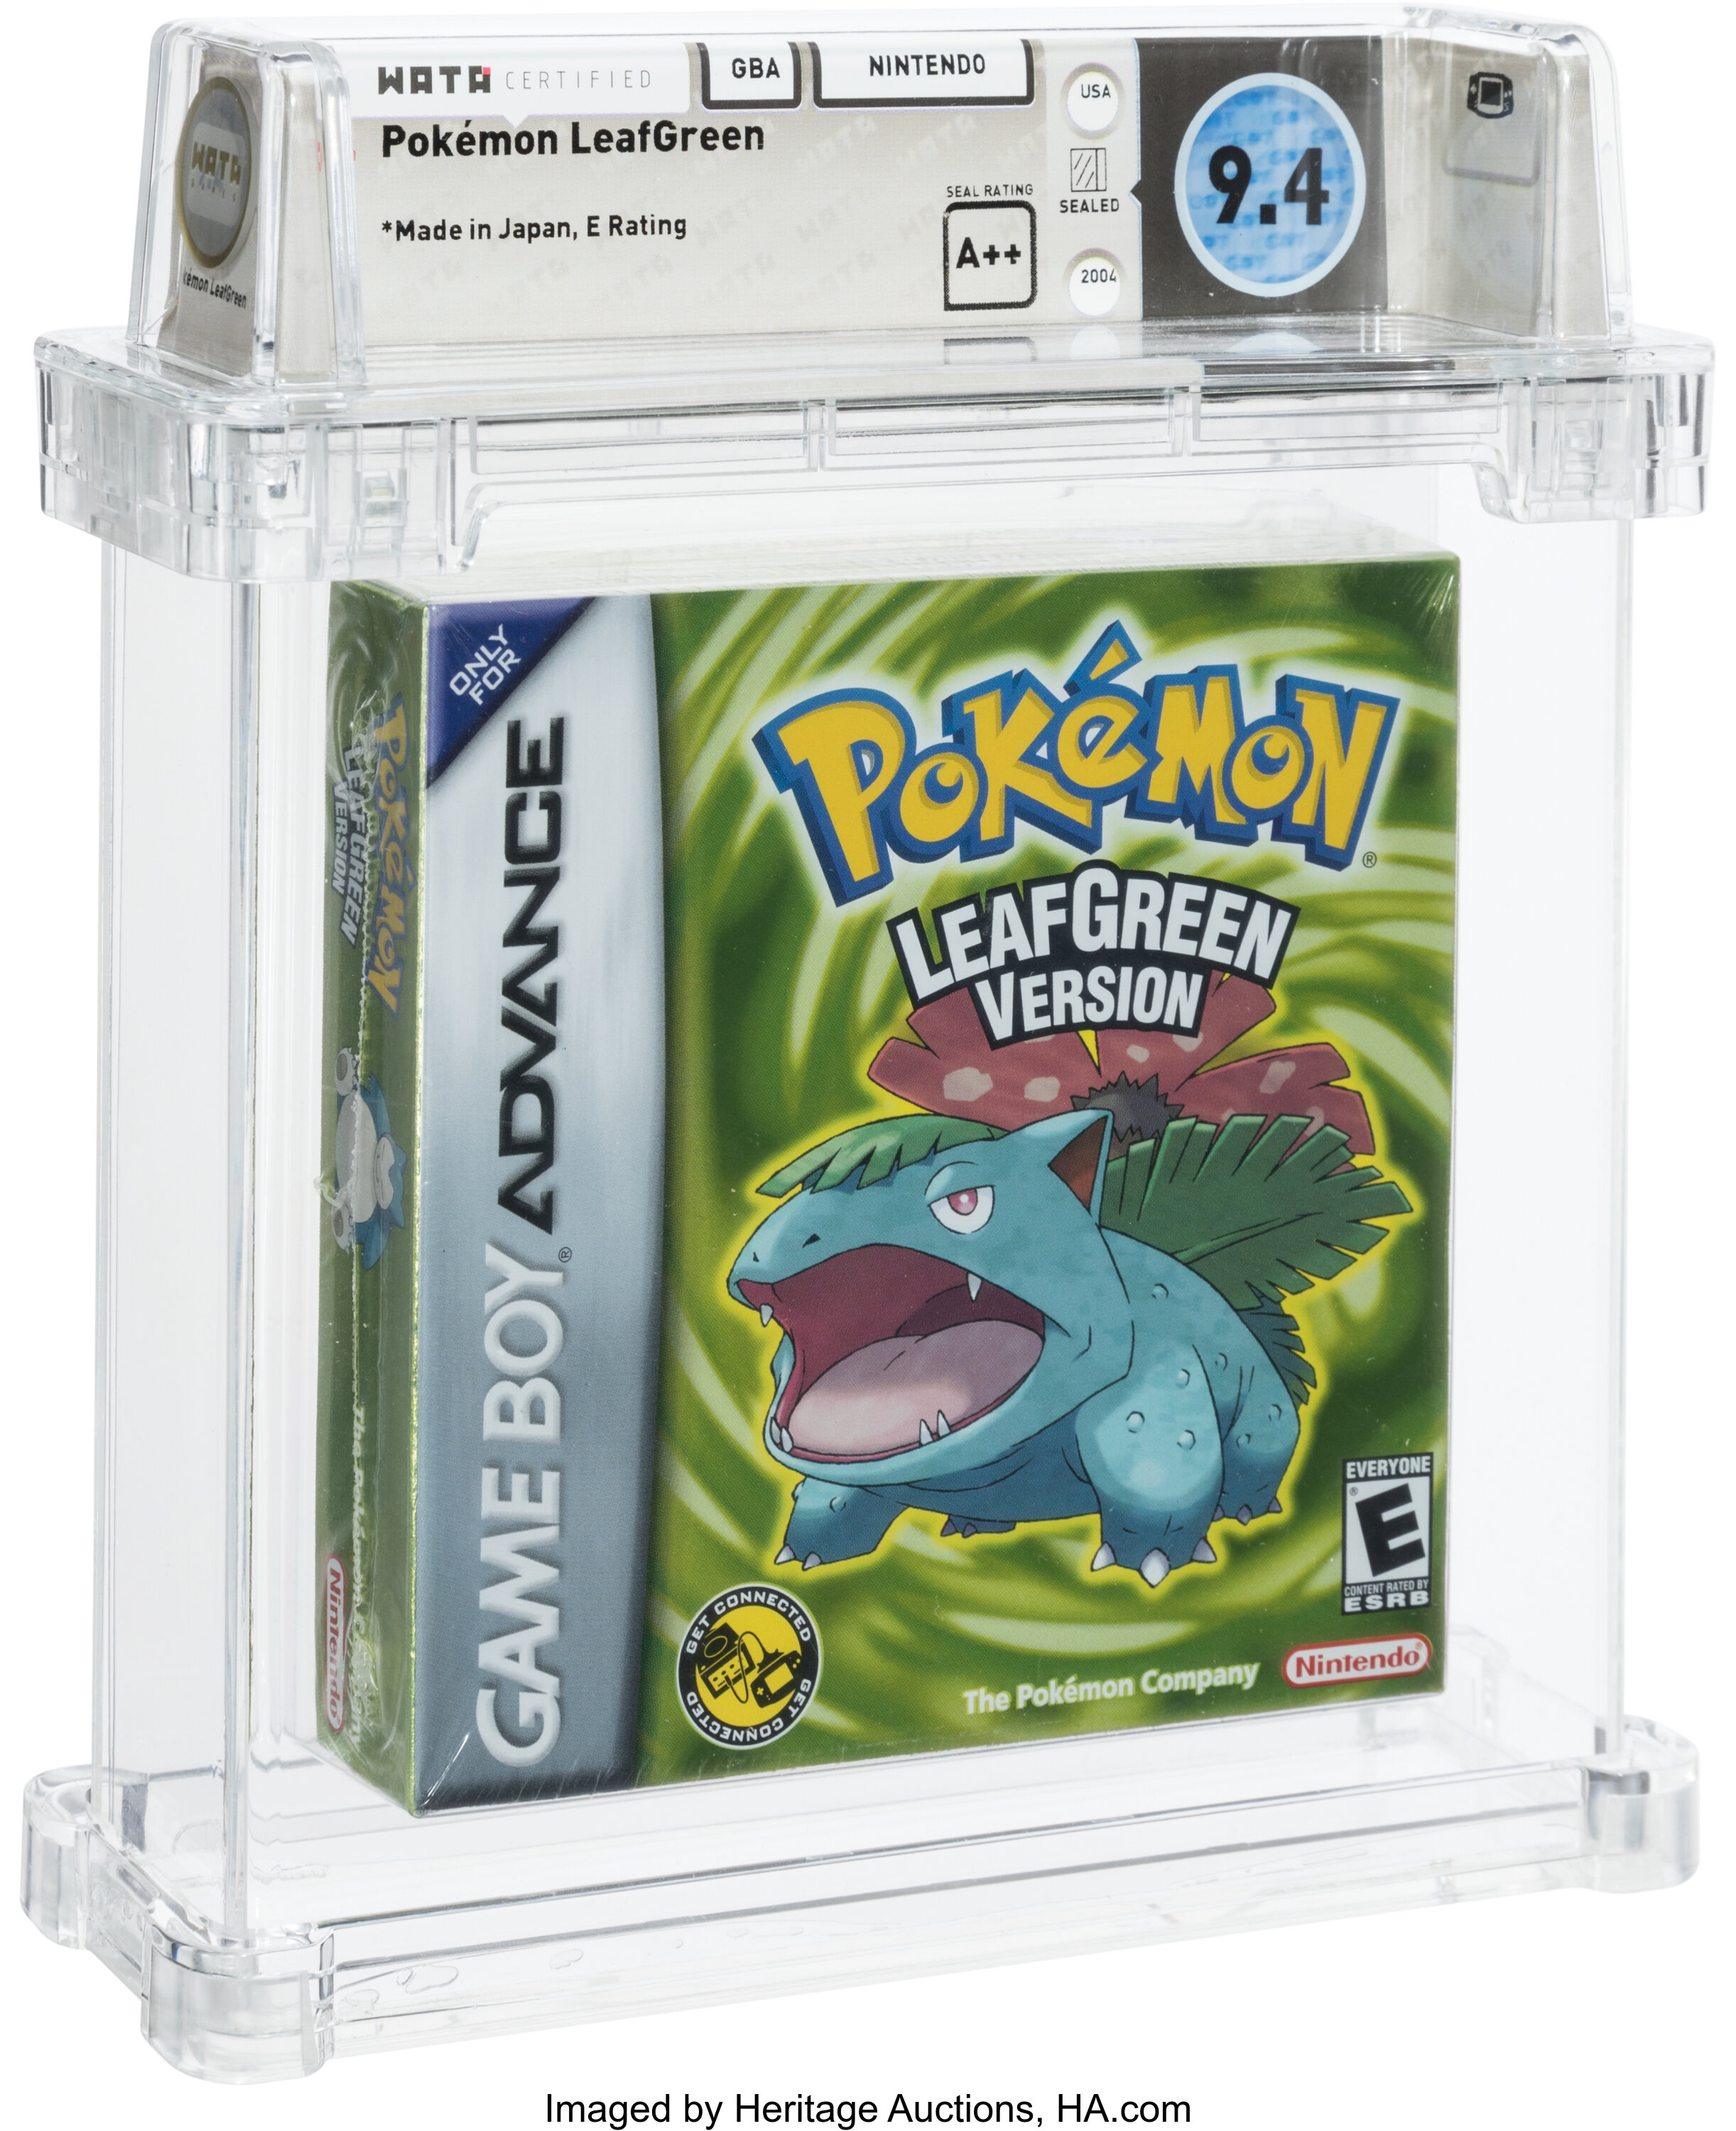 Game Boy Advance - Pokémon FireRed / LeafGreen - Pikachu (Menu